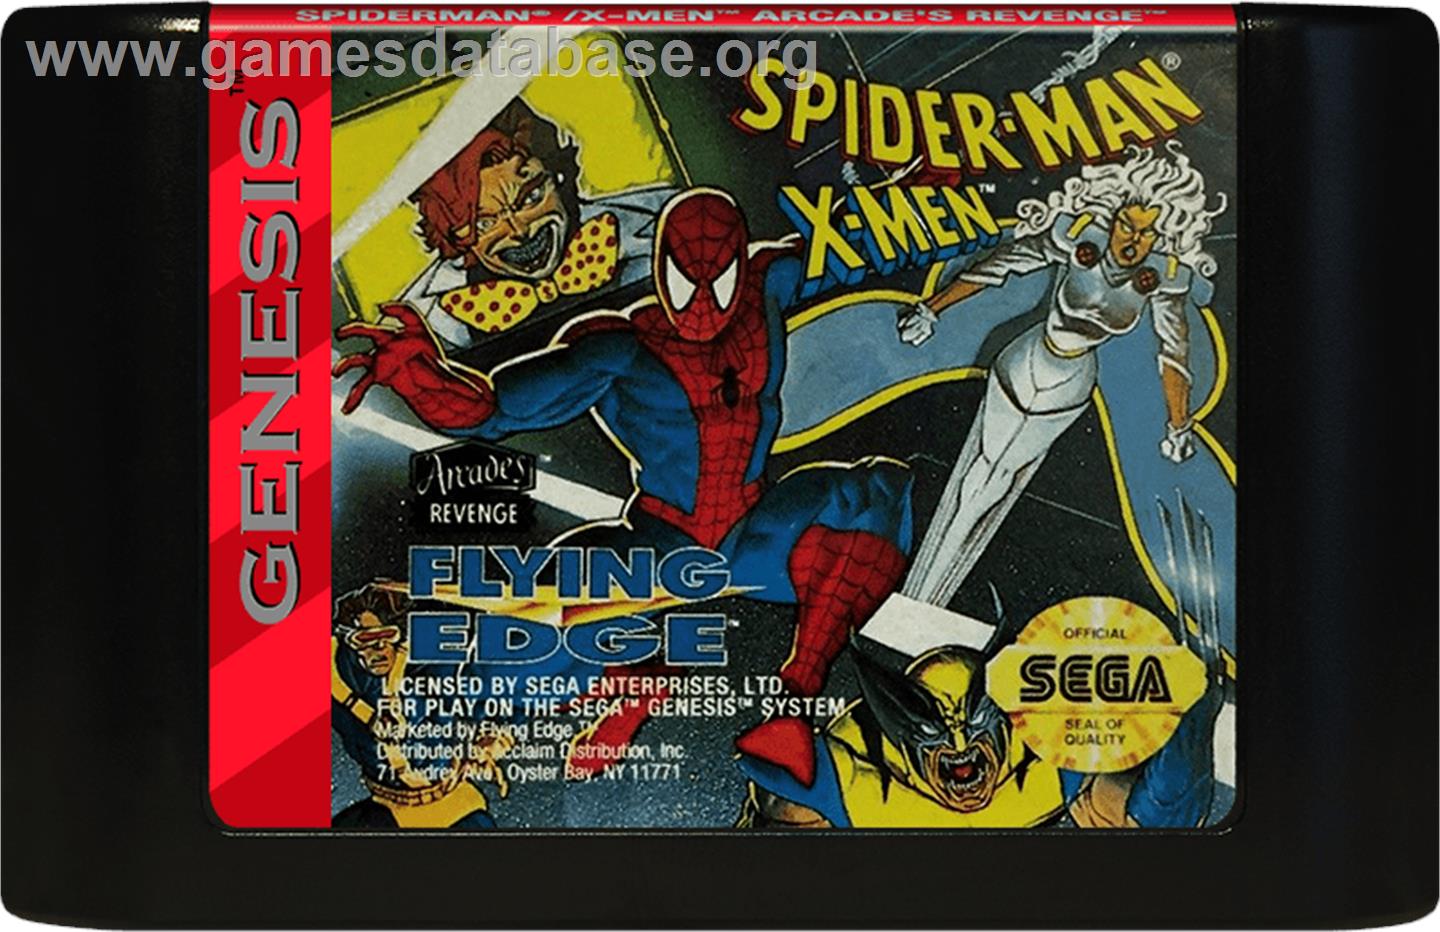 Spider-Man and the X-Men: Arcade's Revenge - Sega Genesis - Artwork - Cartridge